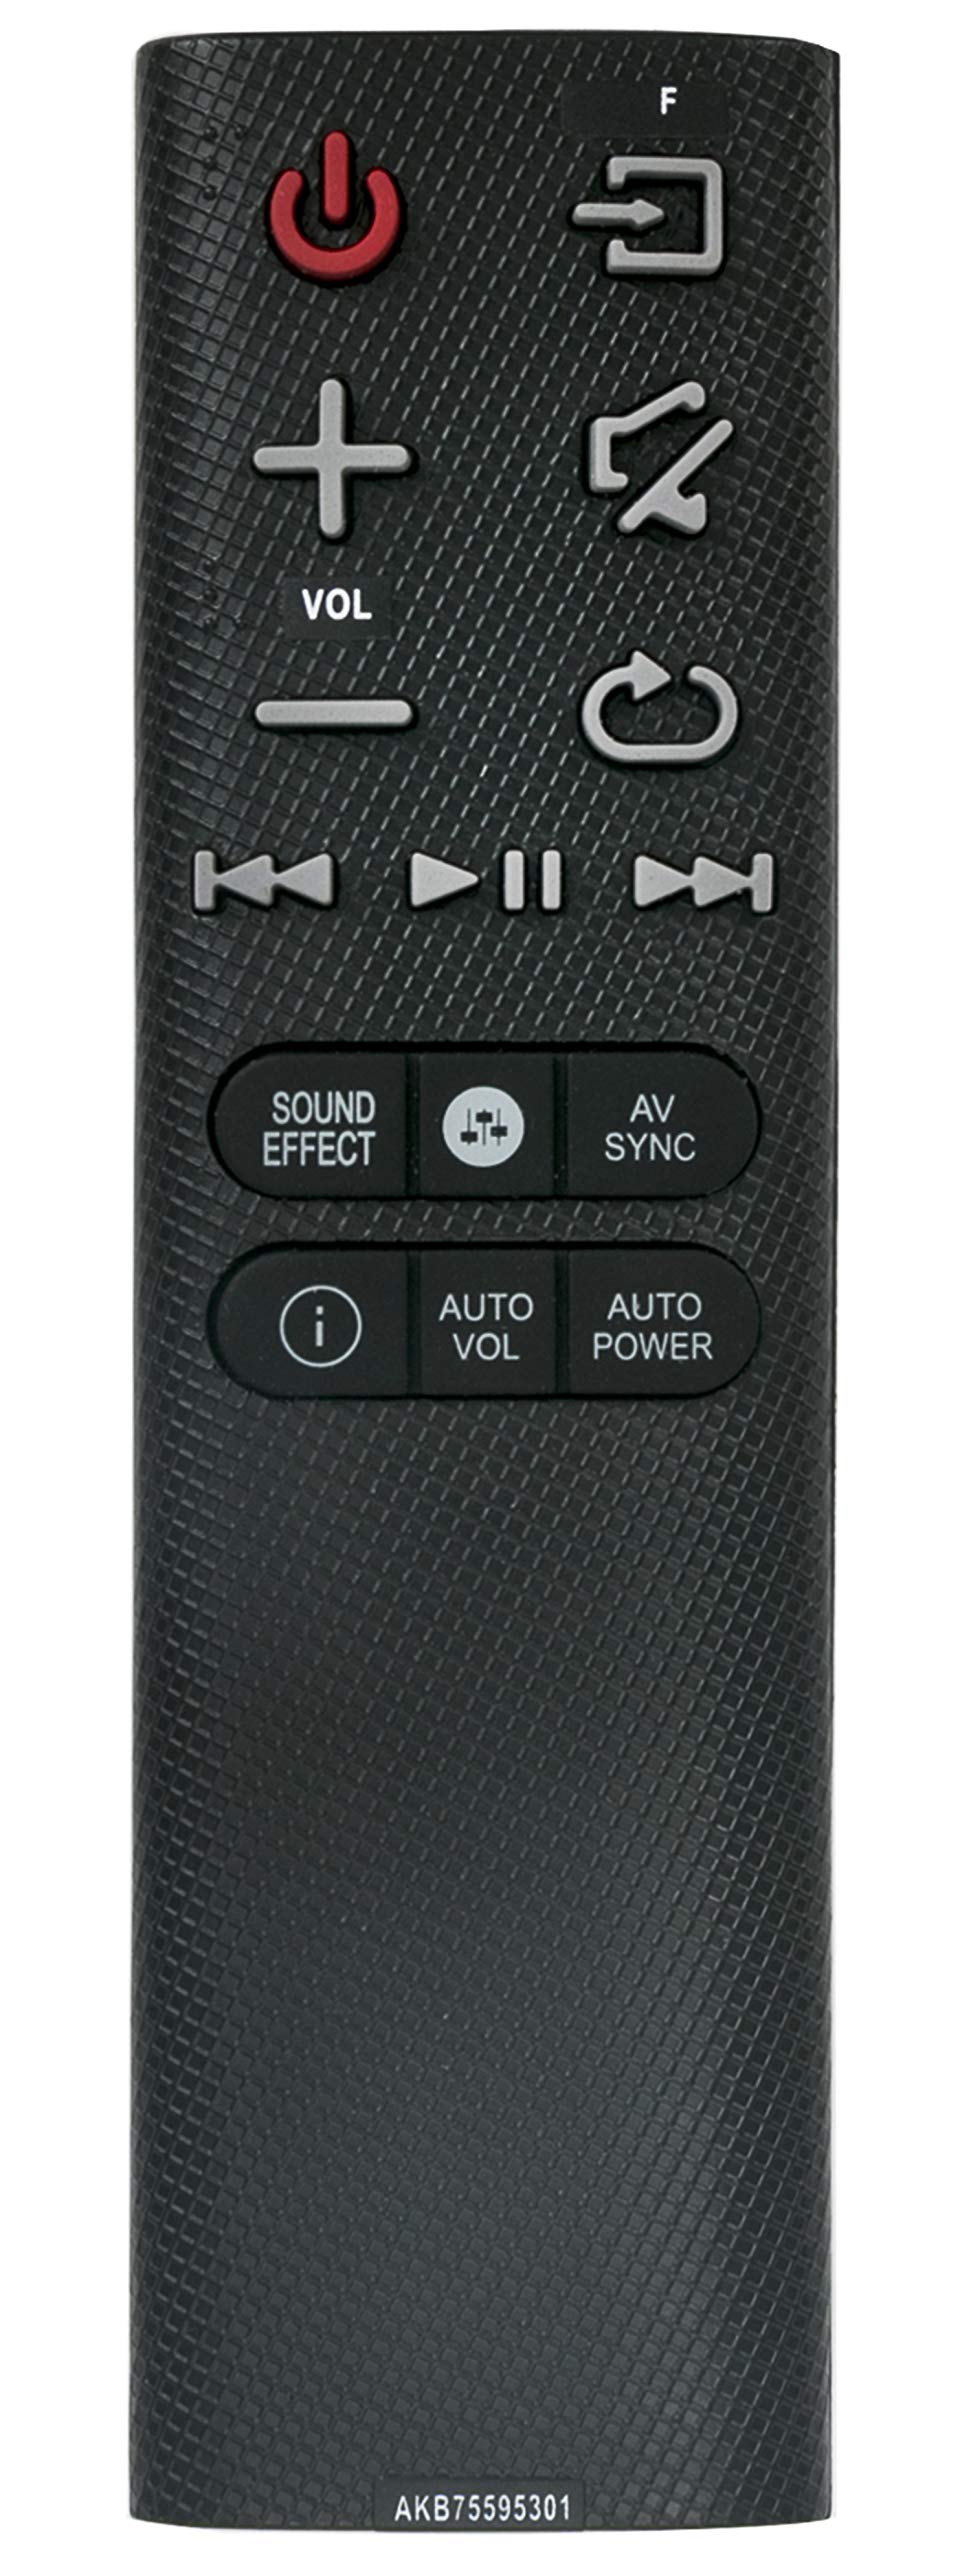 AKB75595301 Replaced Remote fit for LG Sound Bar SK6 SK6Y SK8 SK8Y SK9 SK9Y SK10 SK10Y SKC9 SPK8-W SPK5B-W - LeoForward Australia